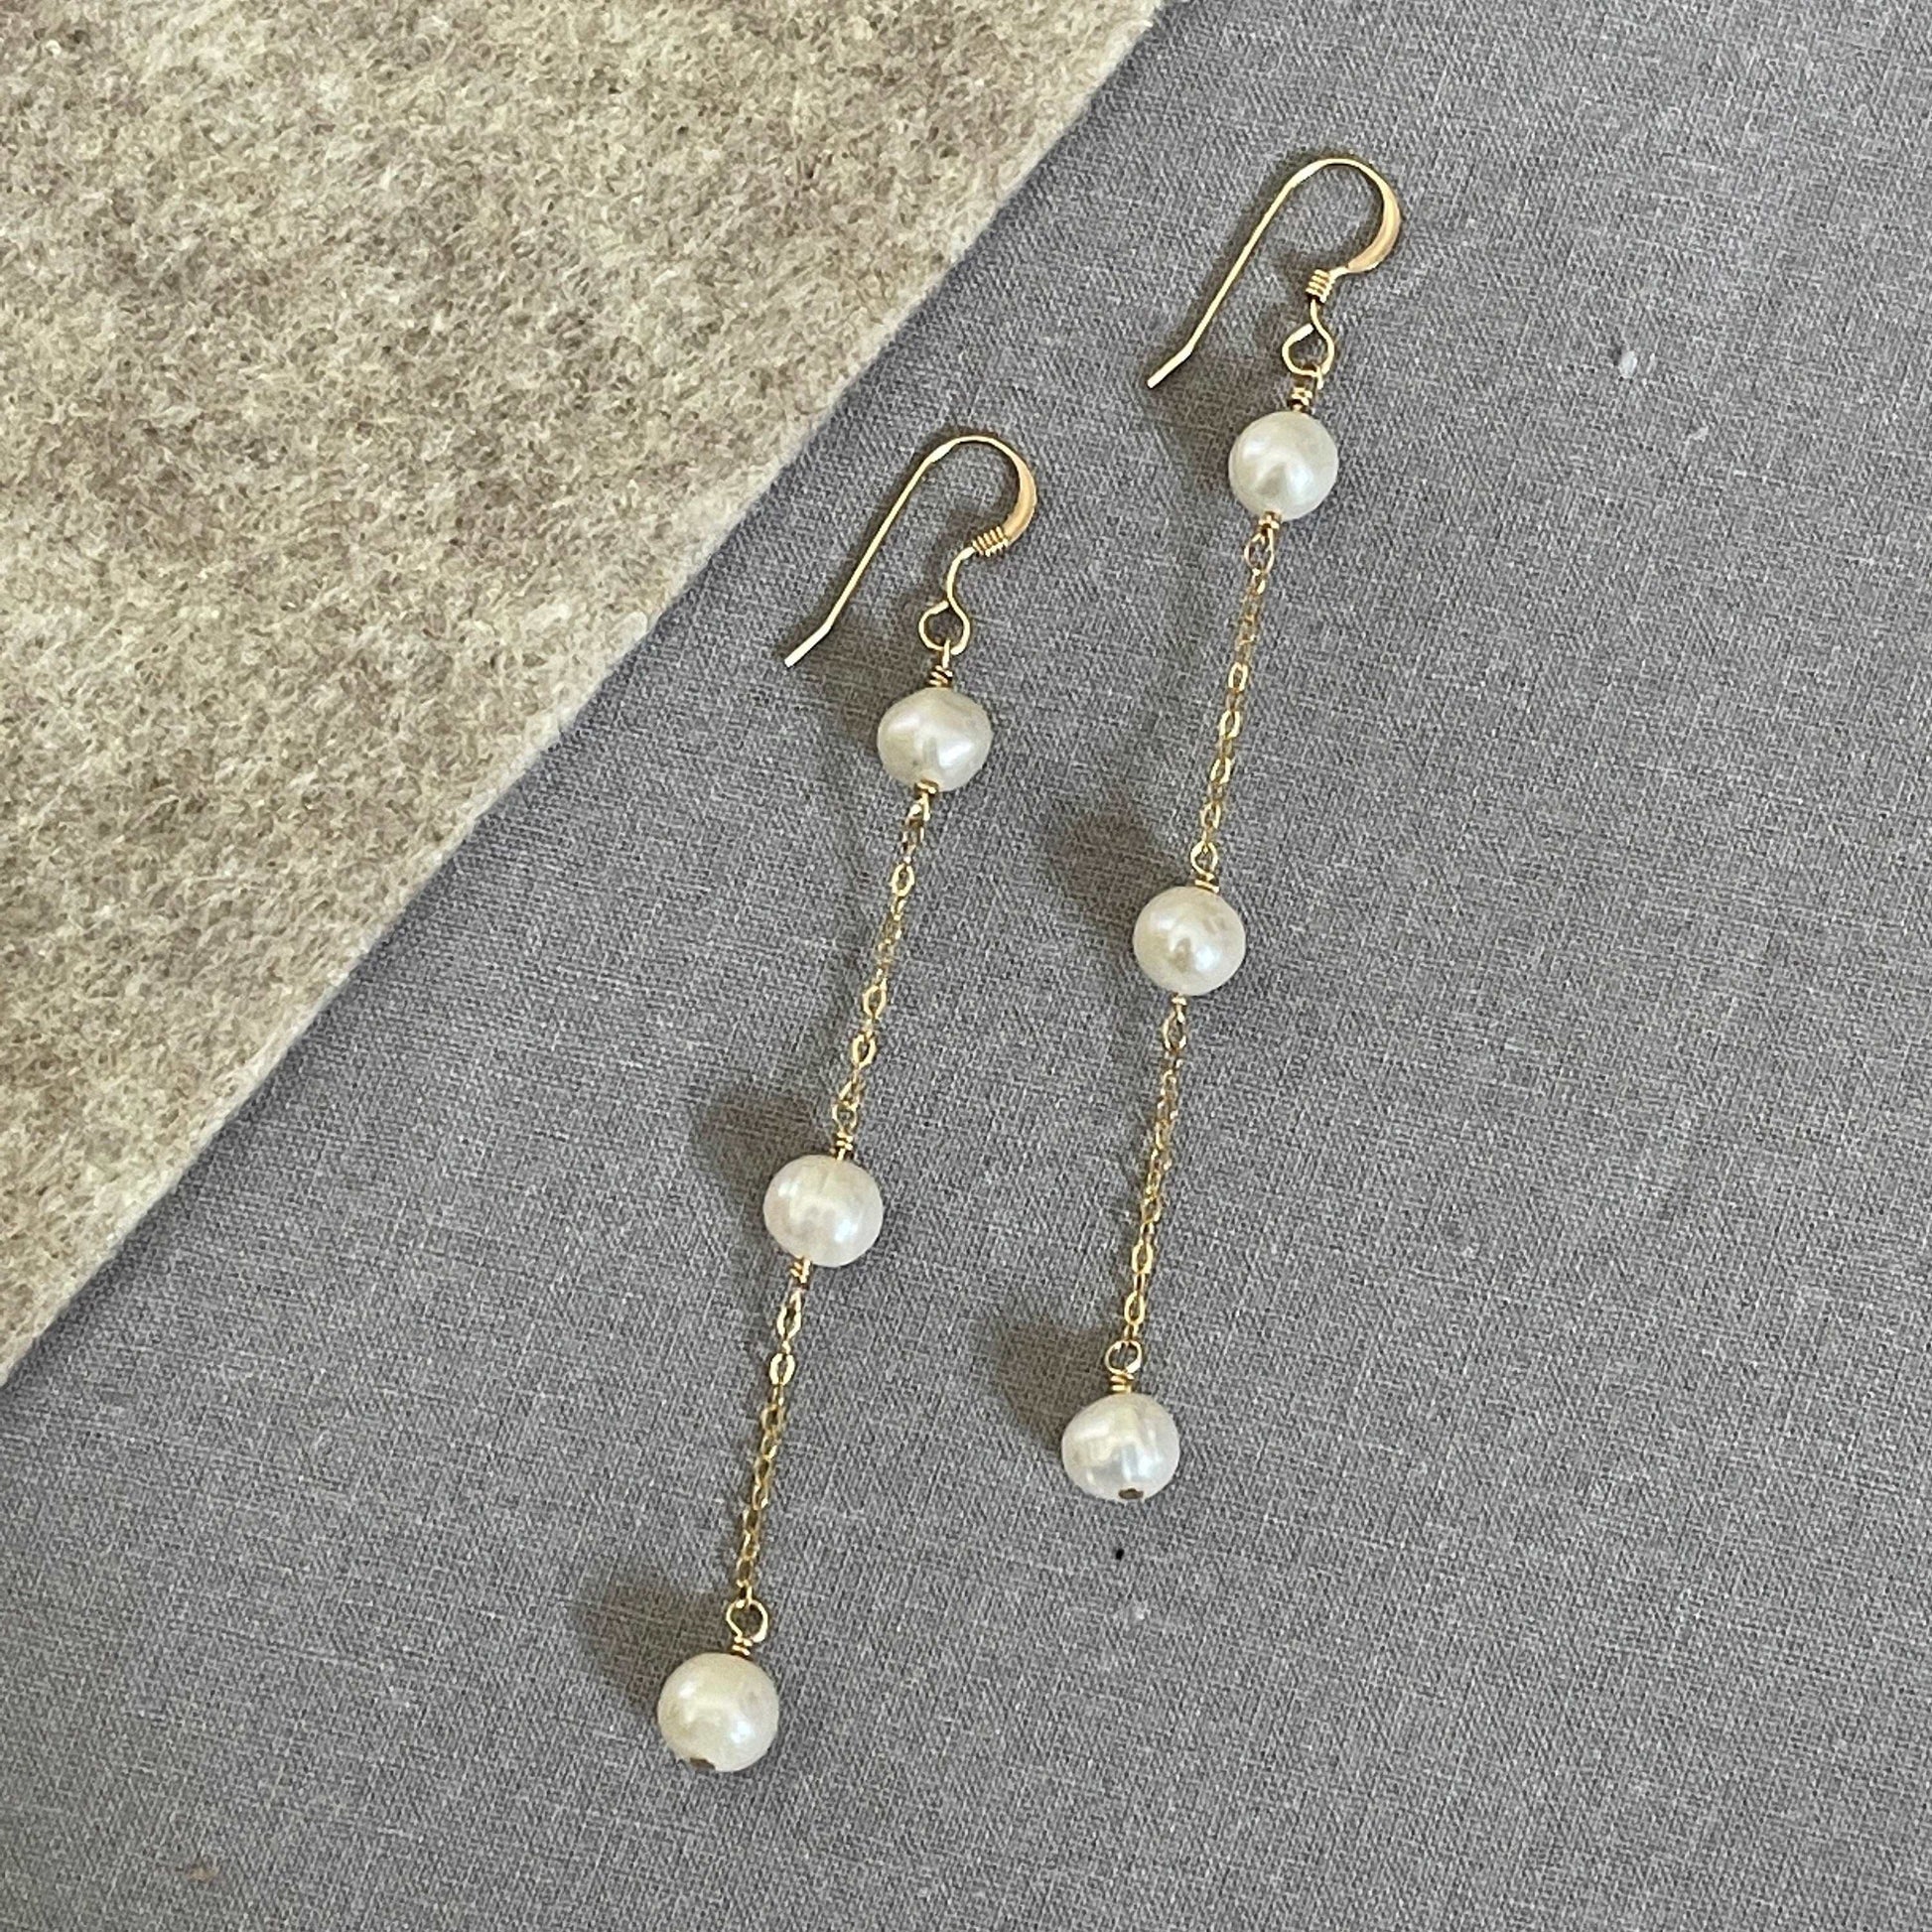 14K Gold Filled Tarnish Resistant, Pearl Drop Earrings, 3 Pearls Drop Earrings - sjewellery|sara jewellery shop toronto